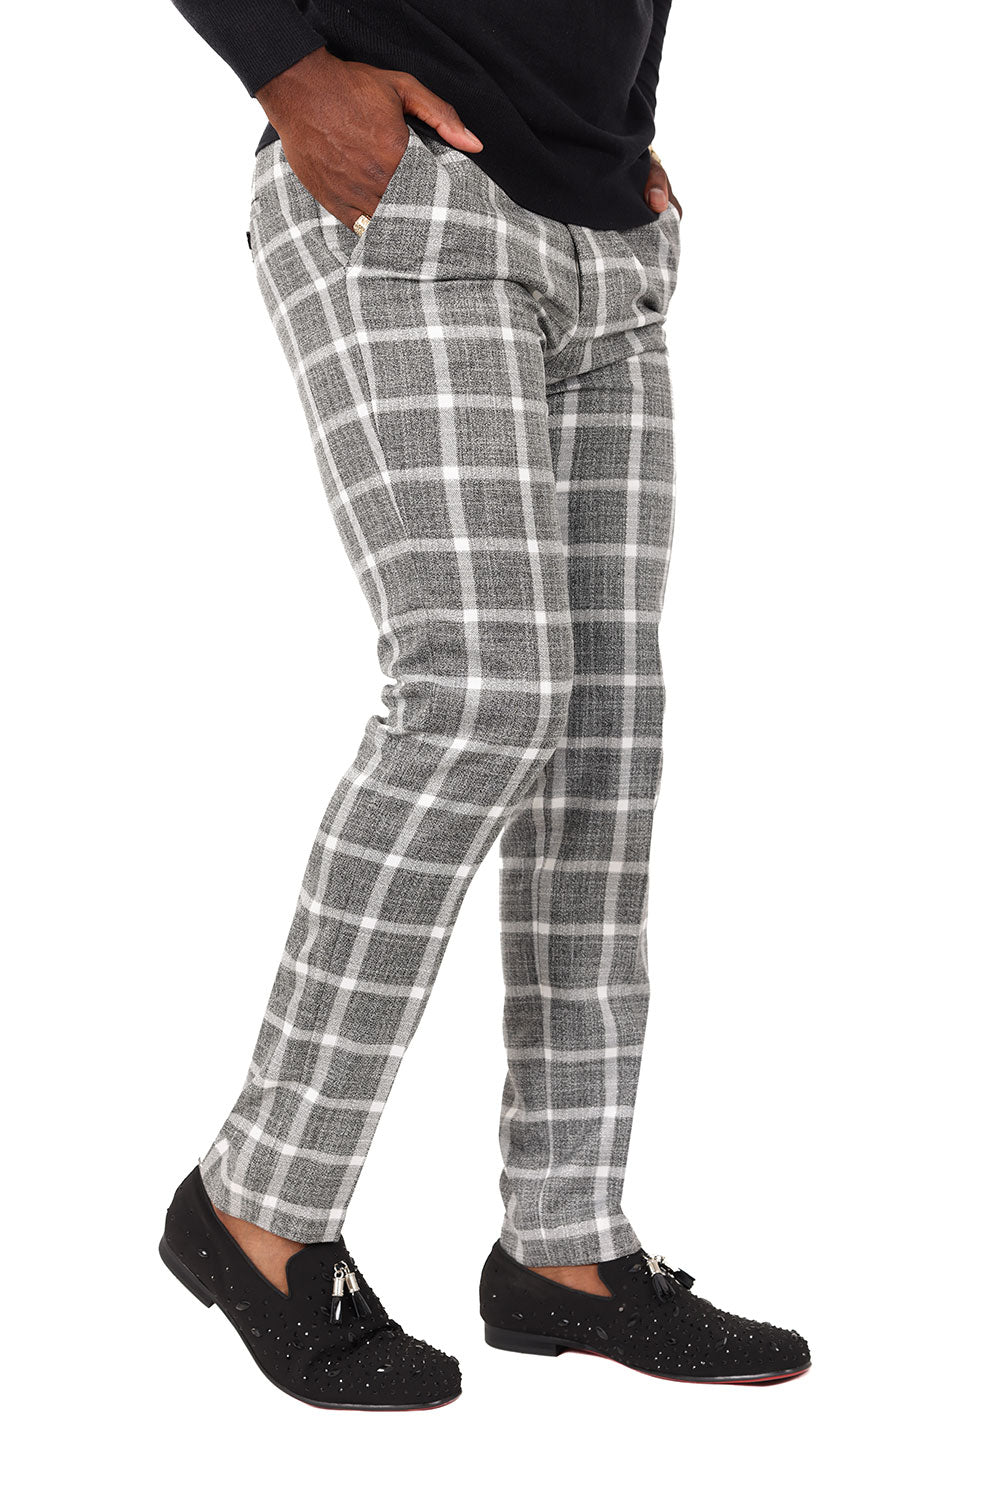 Barabas Men's Printed Checkered Plaid Design Chino Pants 2CP190 Grey White